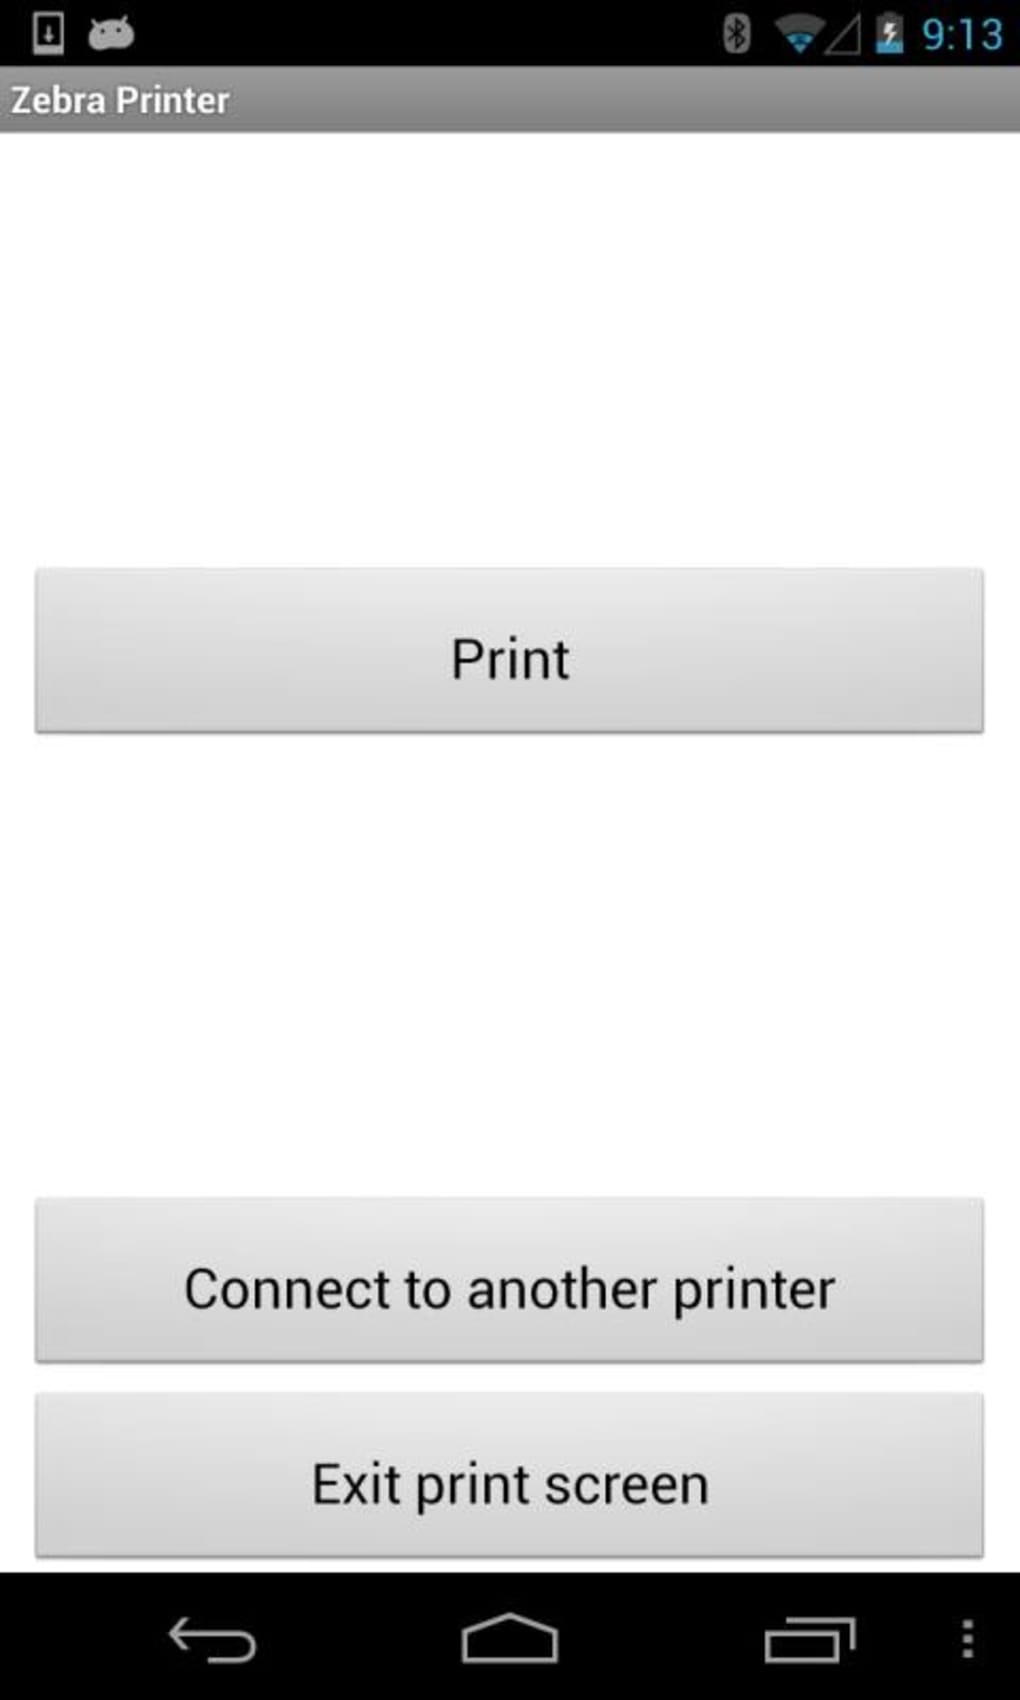 ODK Zebra Printer Driver APK for Android - Download